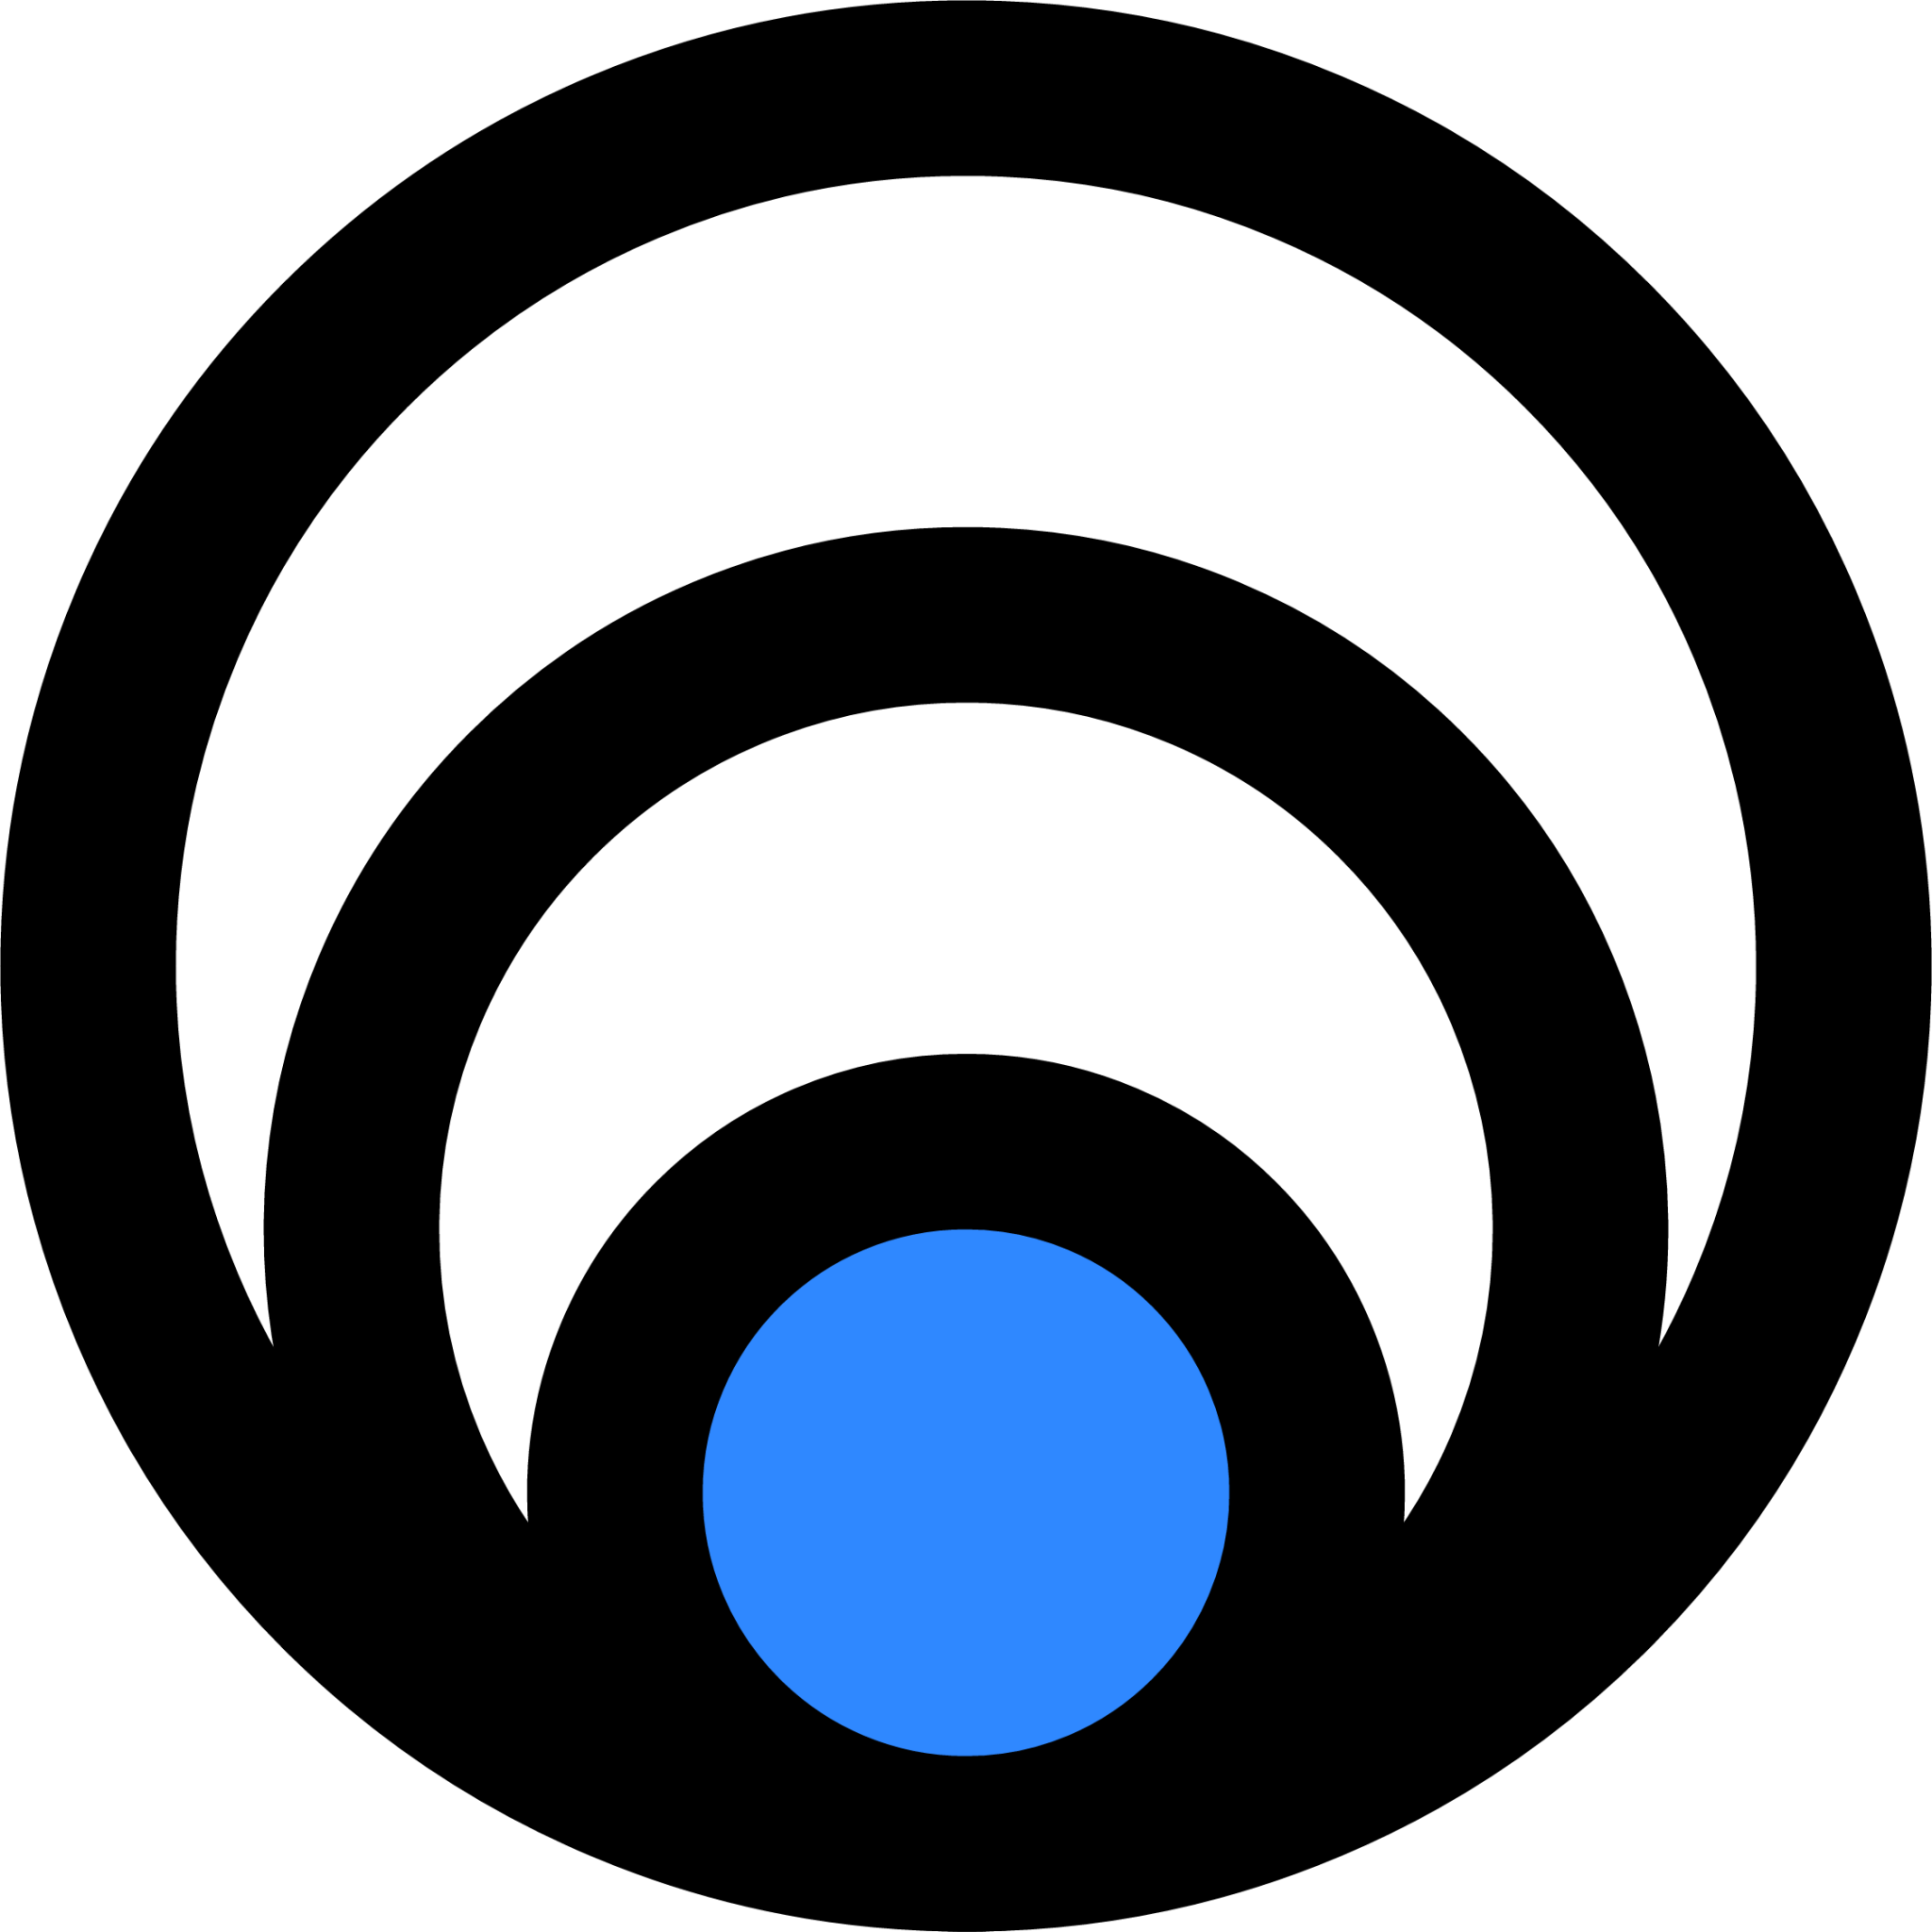 multi circular icon